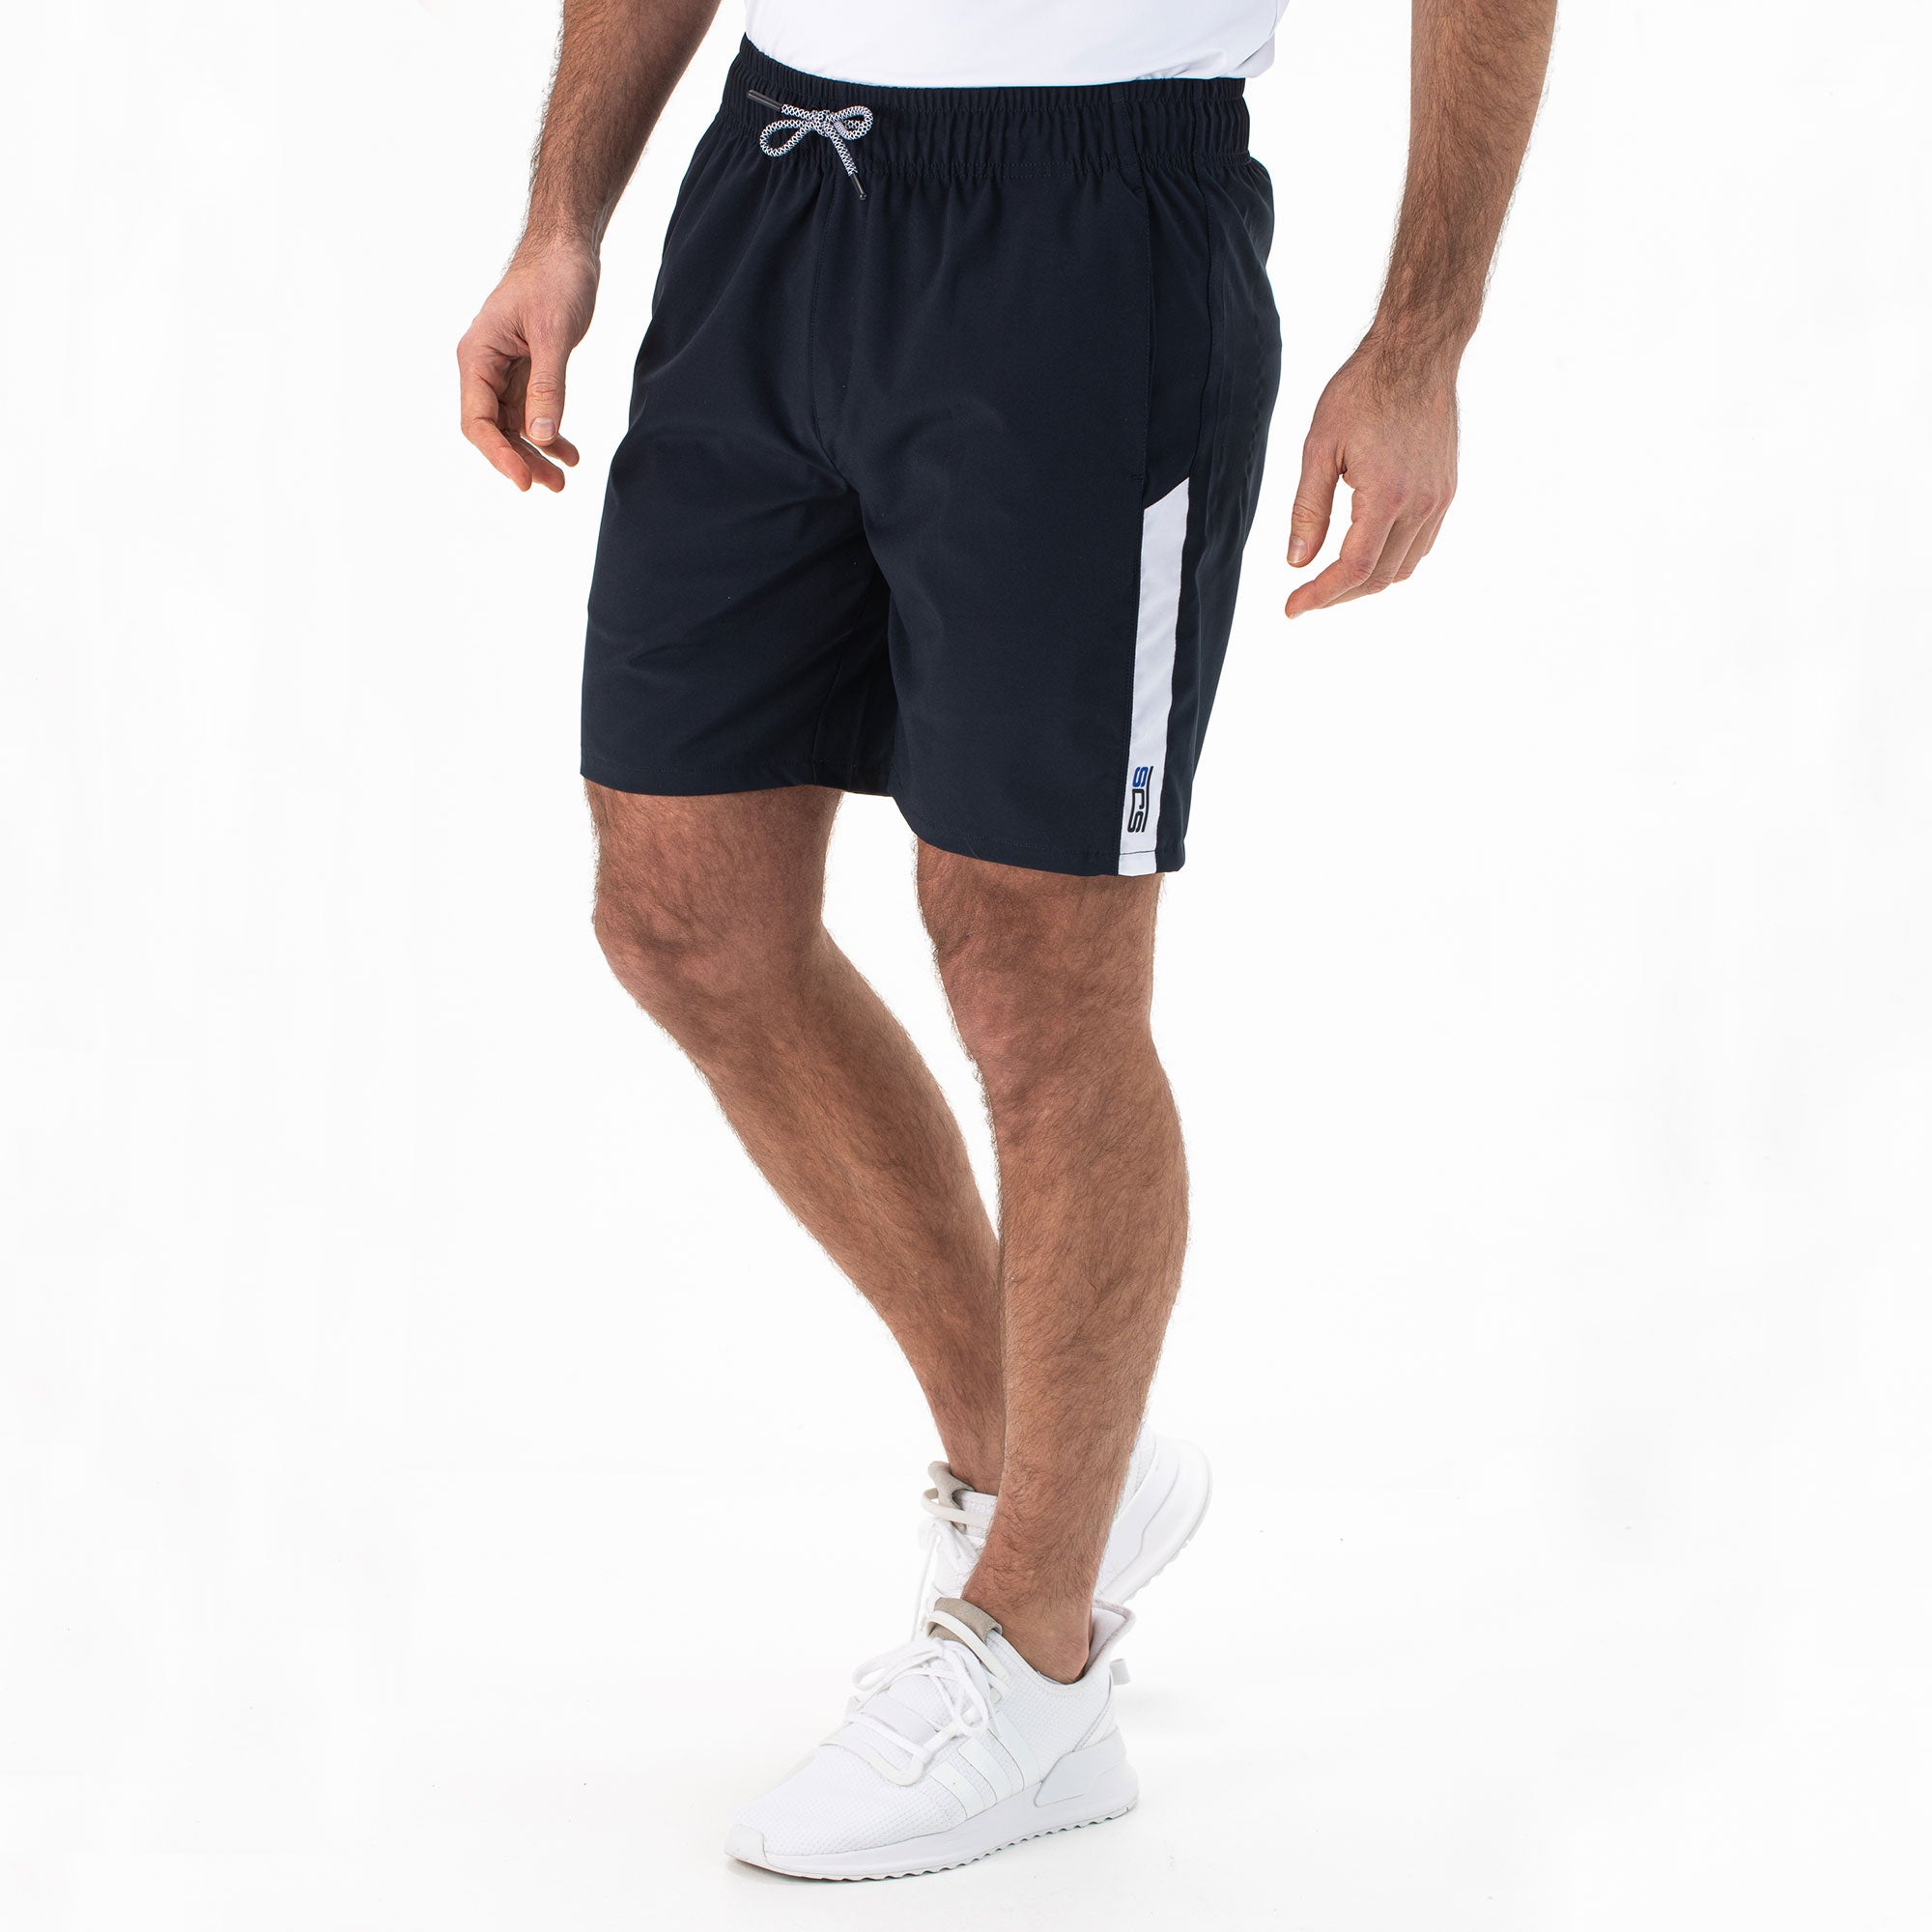 Sjeng Sports Evron Men's Tennis Shorts - Dark Blue (1)